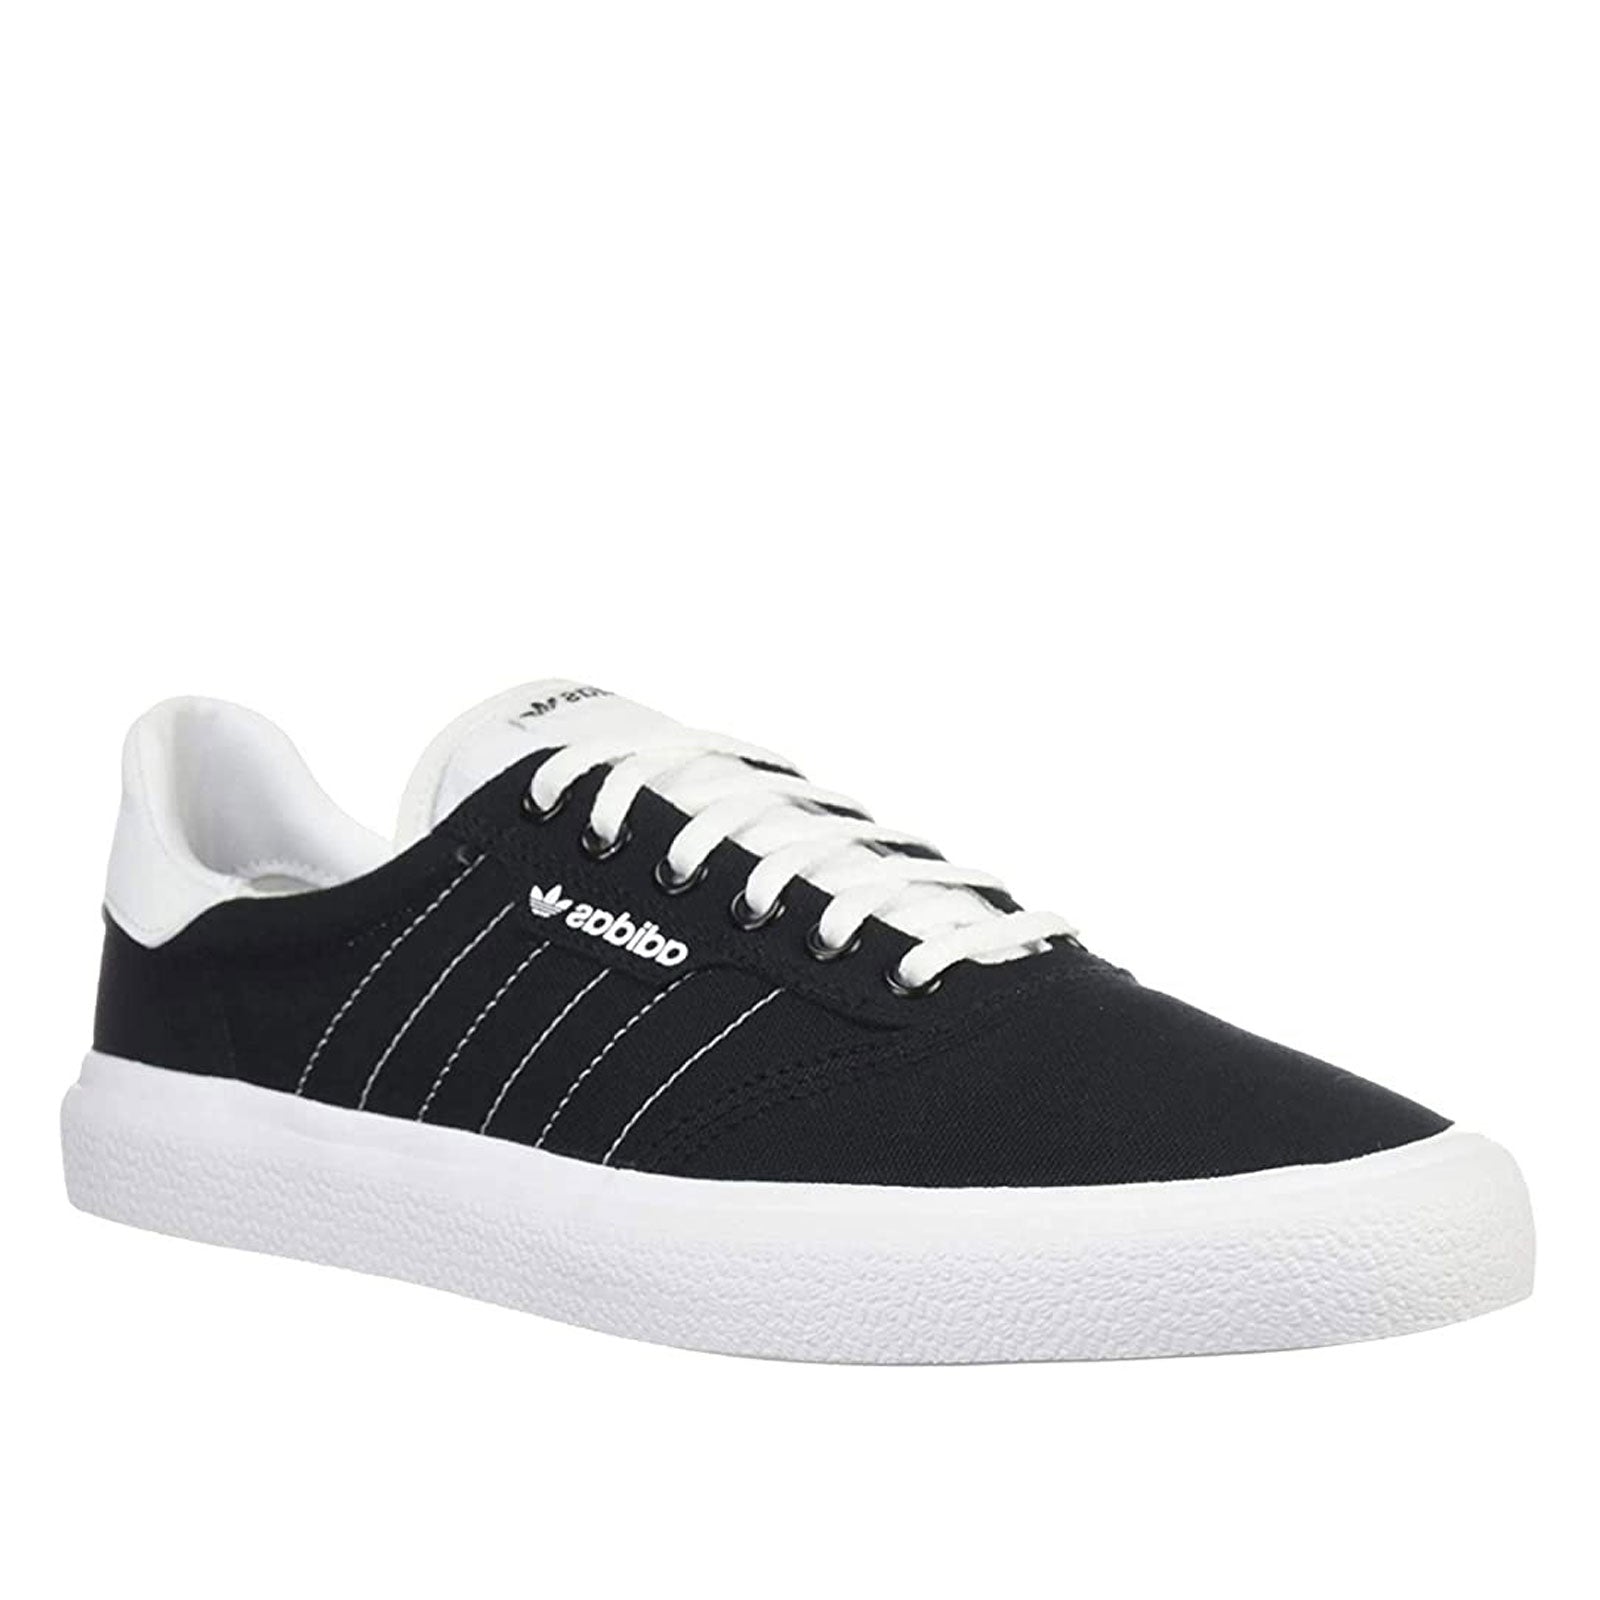 adidas 3mc core black white